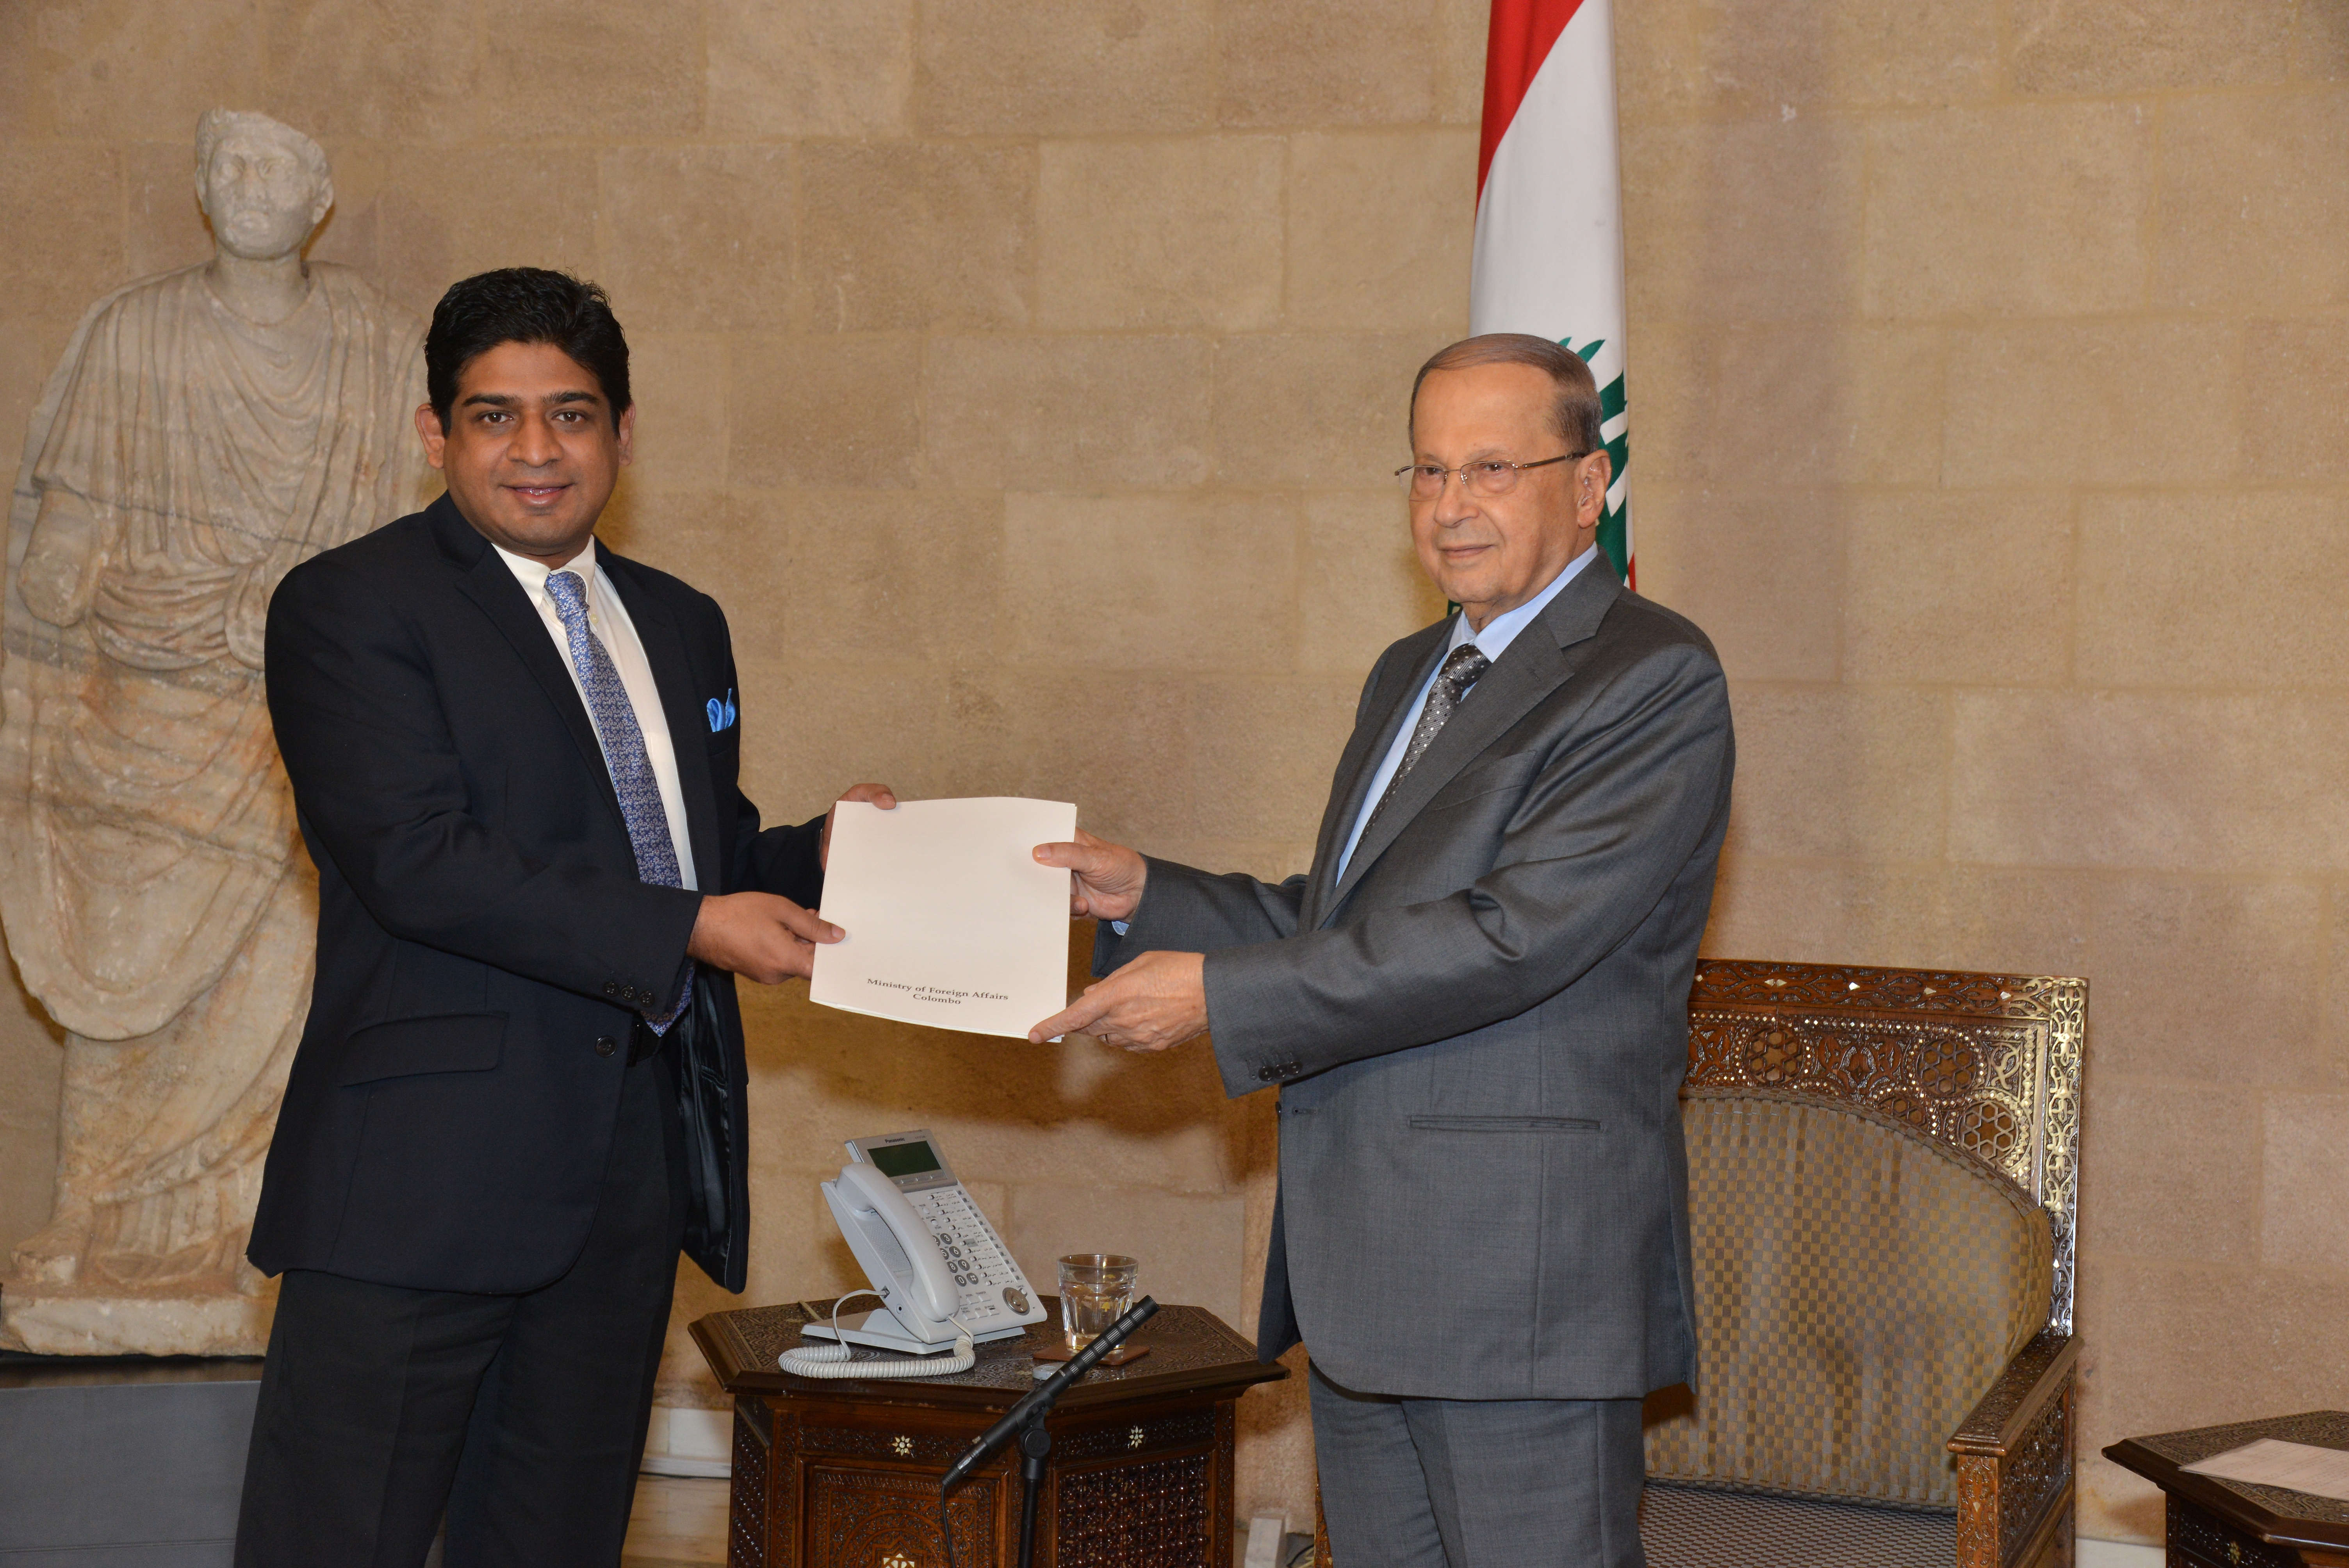 Meeting with H.E. Michel Aoun, President of the Republic of Lebanon